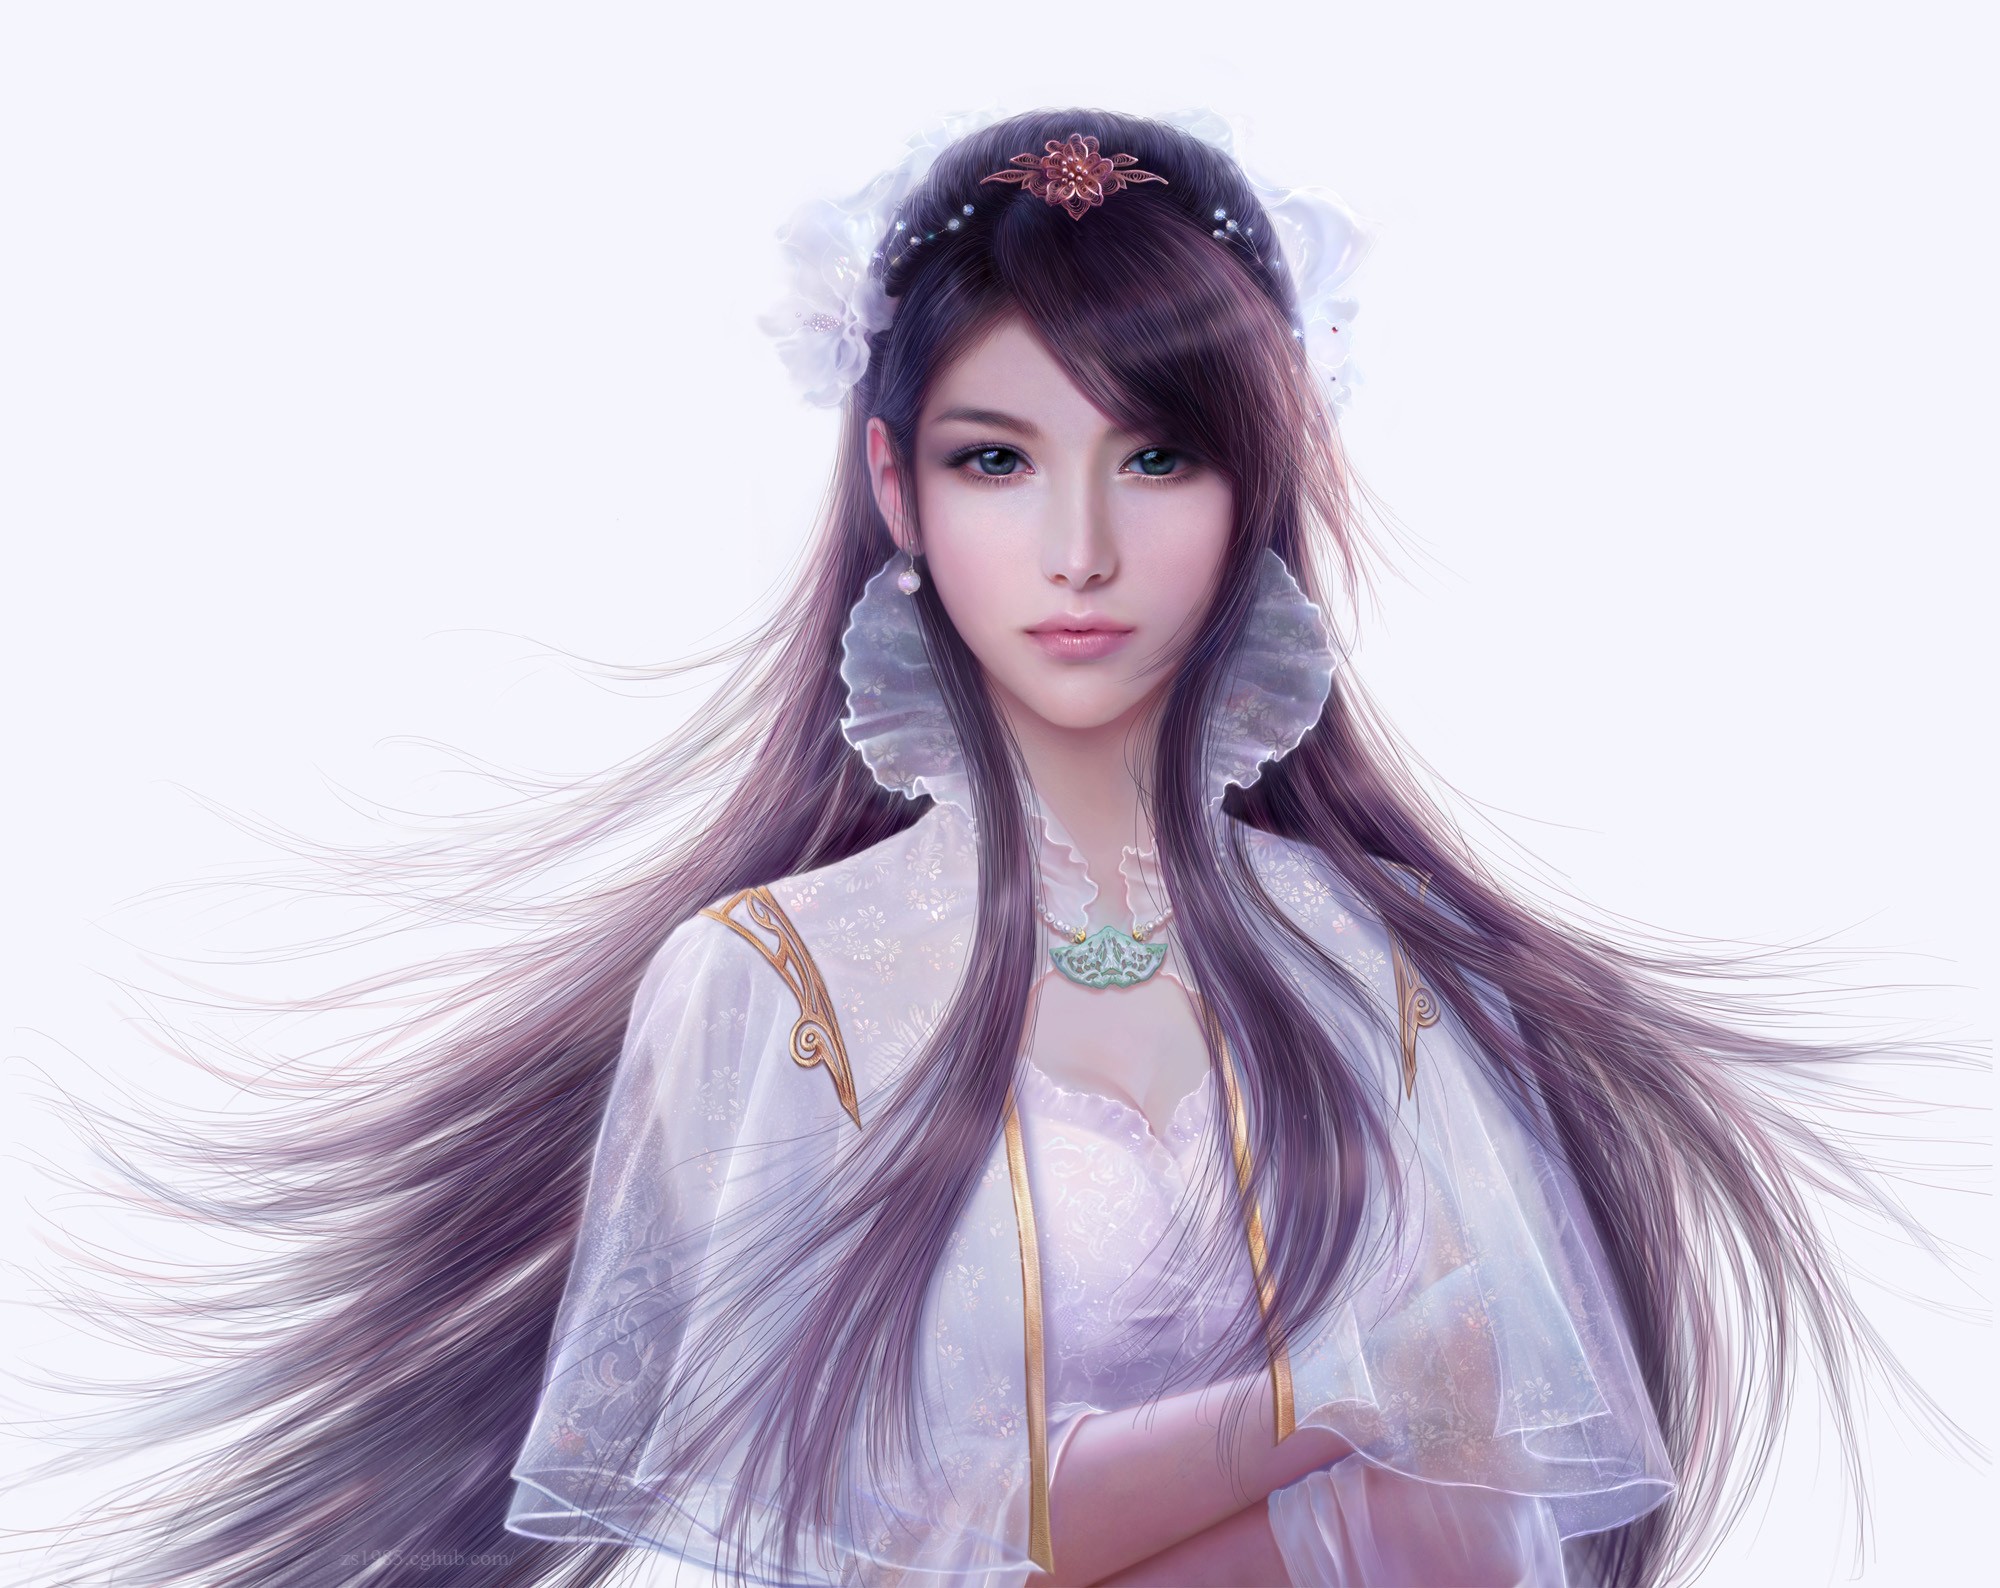 General 2000x1588 artwork women fantasy girl fantasy art long hair Asian dark eyes simple background white background looking at viewer face brunette